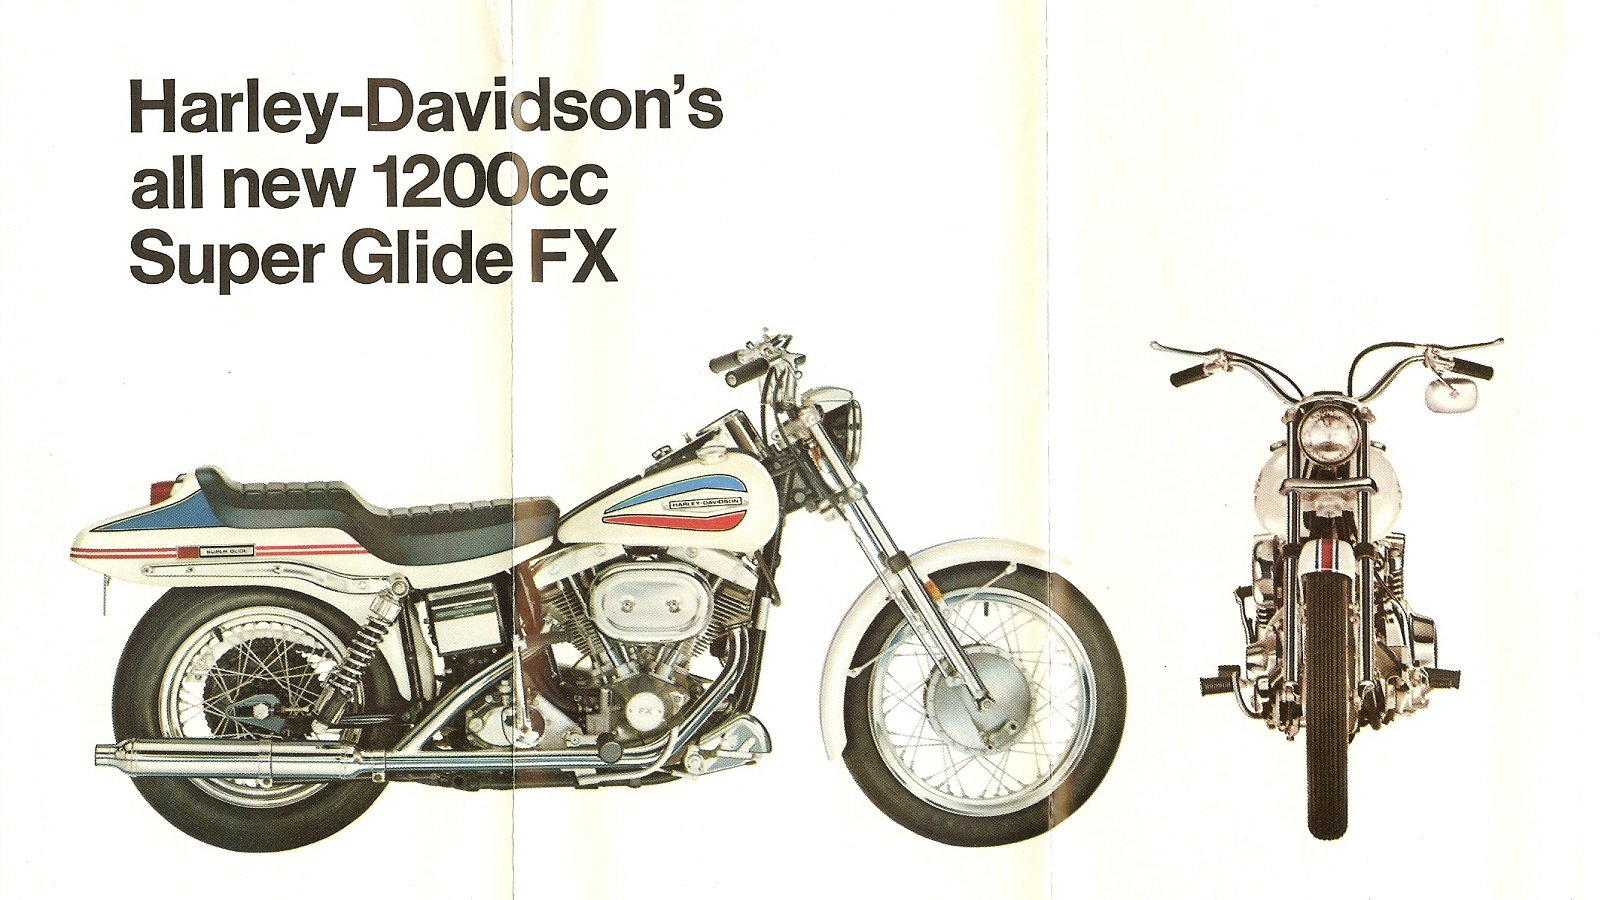 9 Facts About the Original 1971-85 Harley-Davidson Super Glide